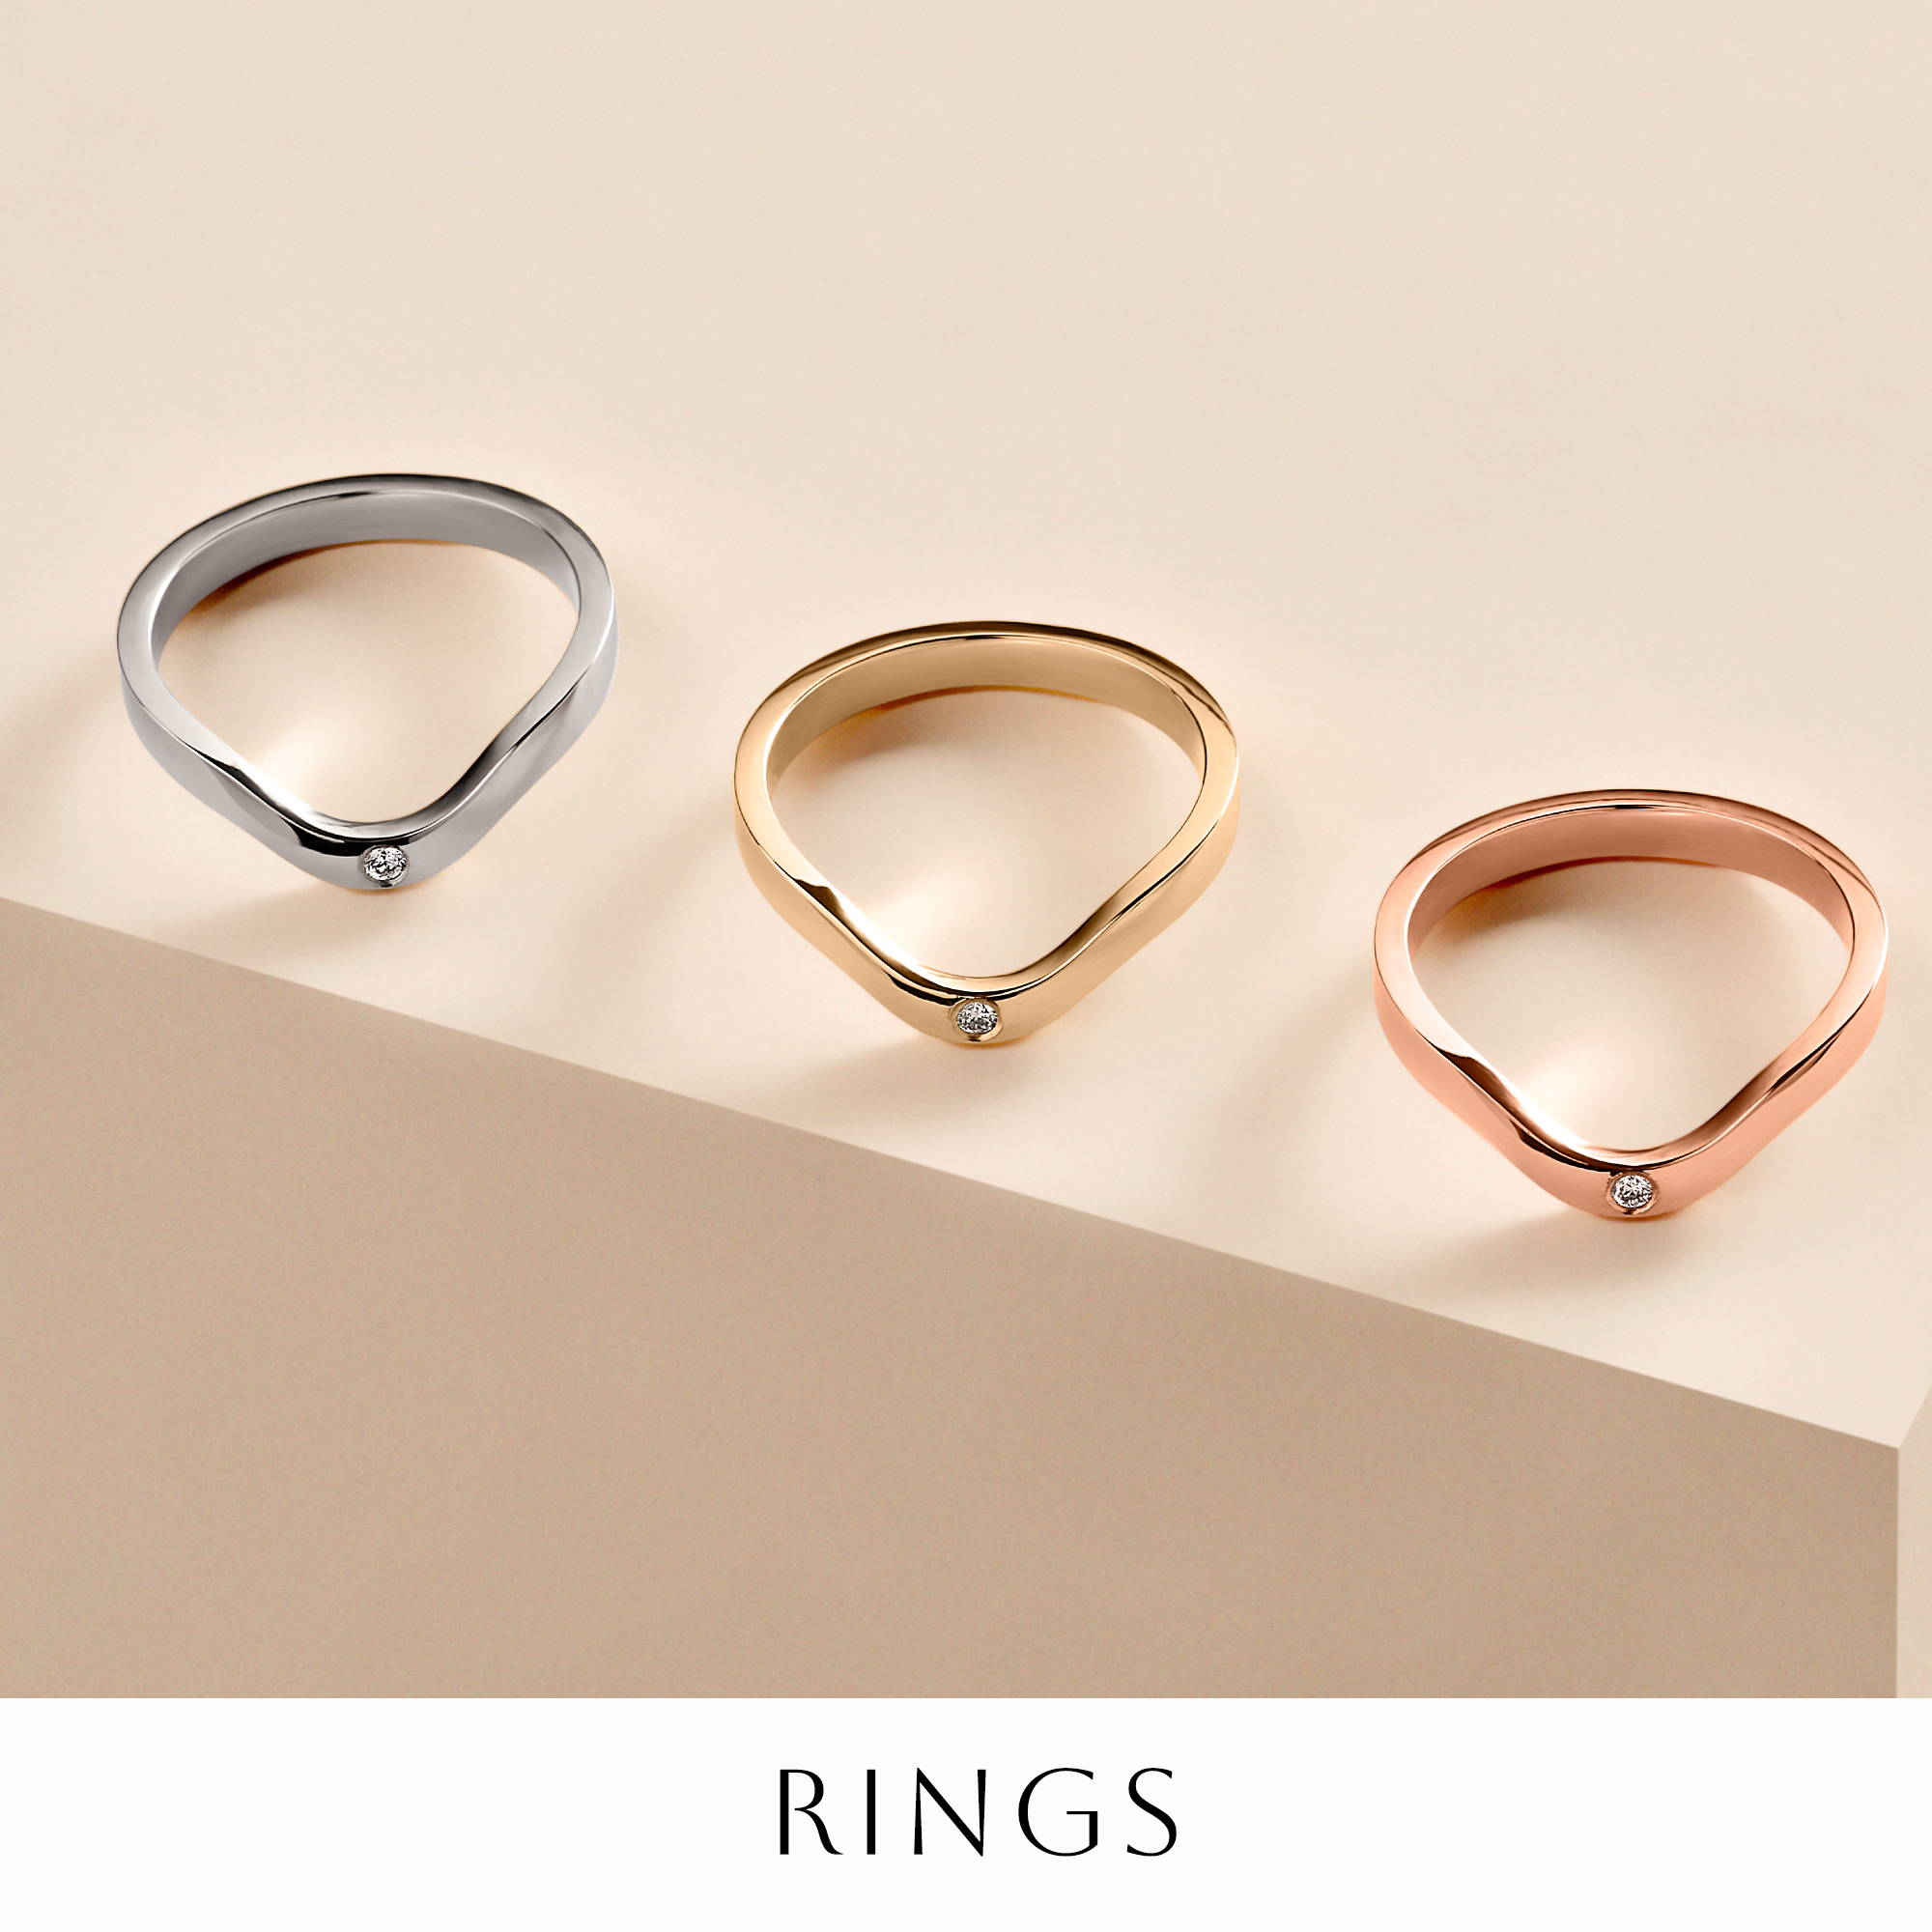 Minimalist Rings From Modaya 